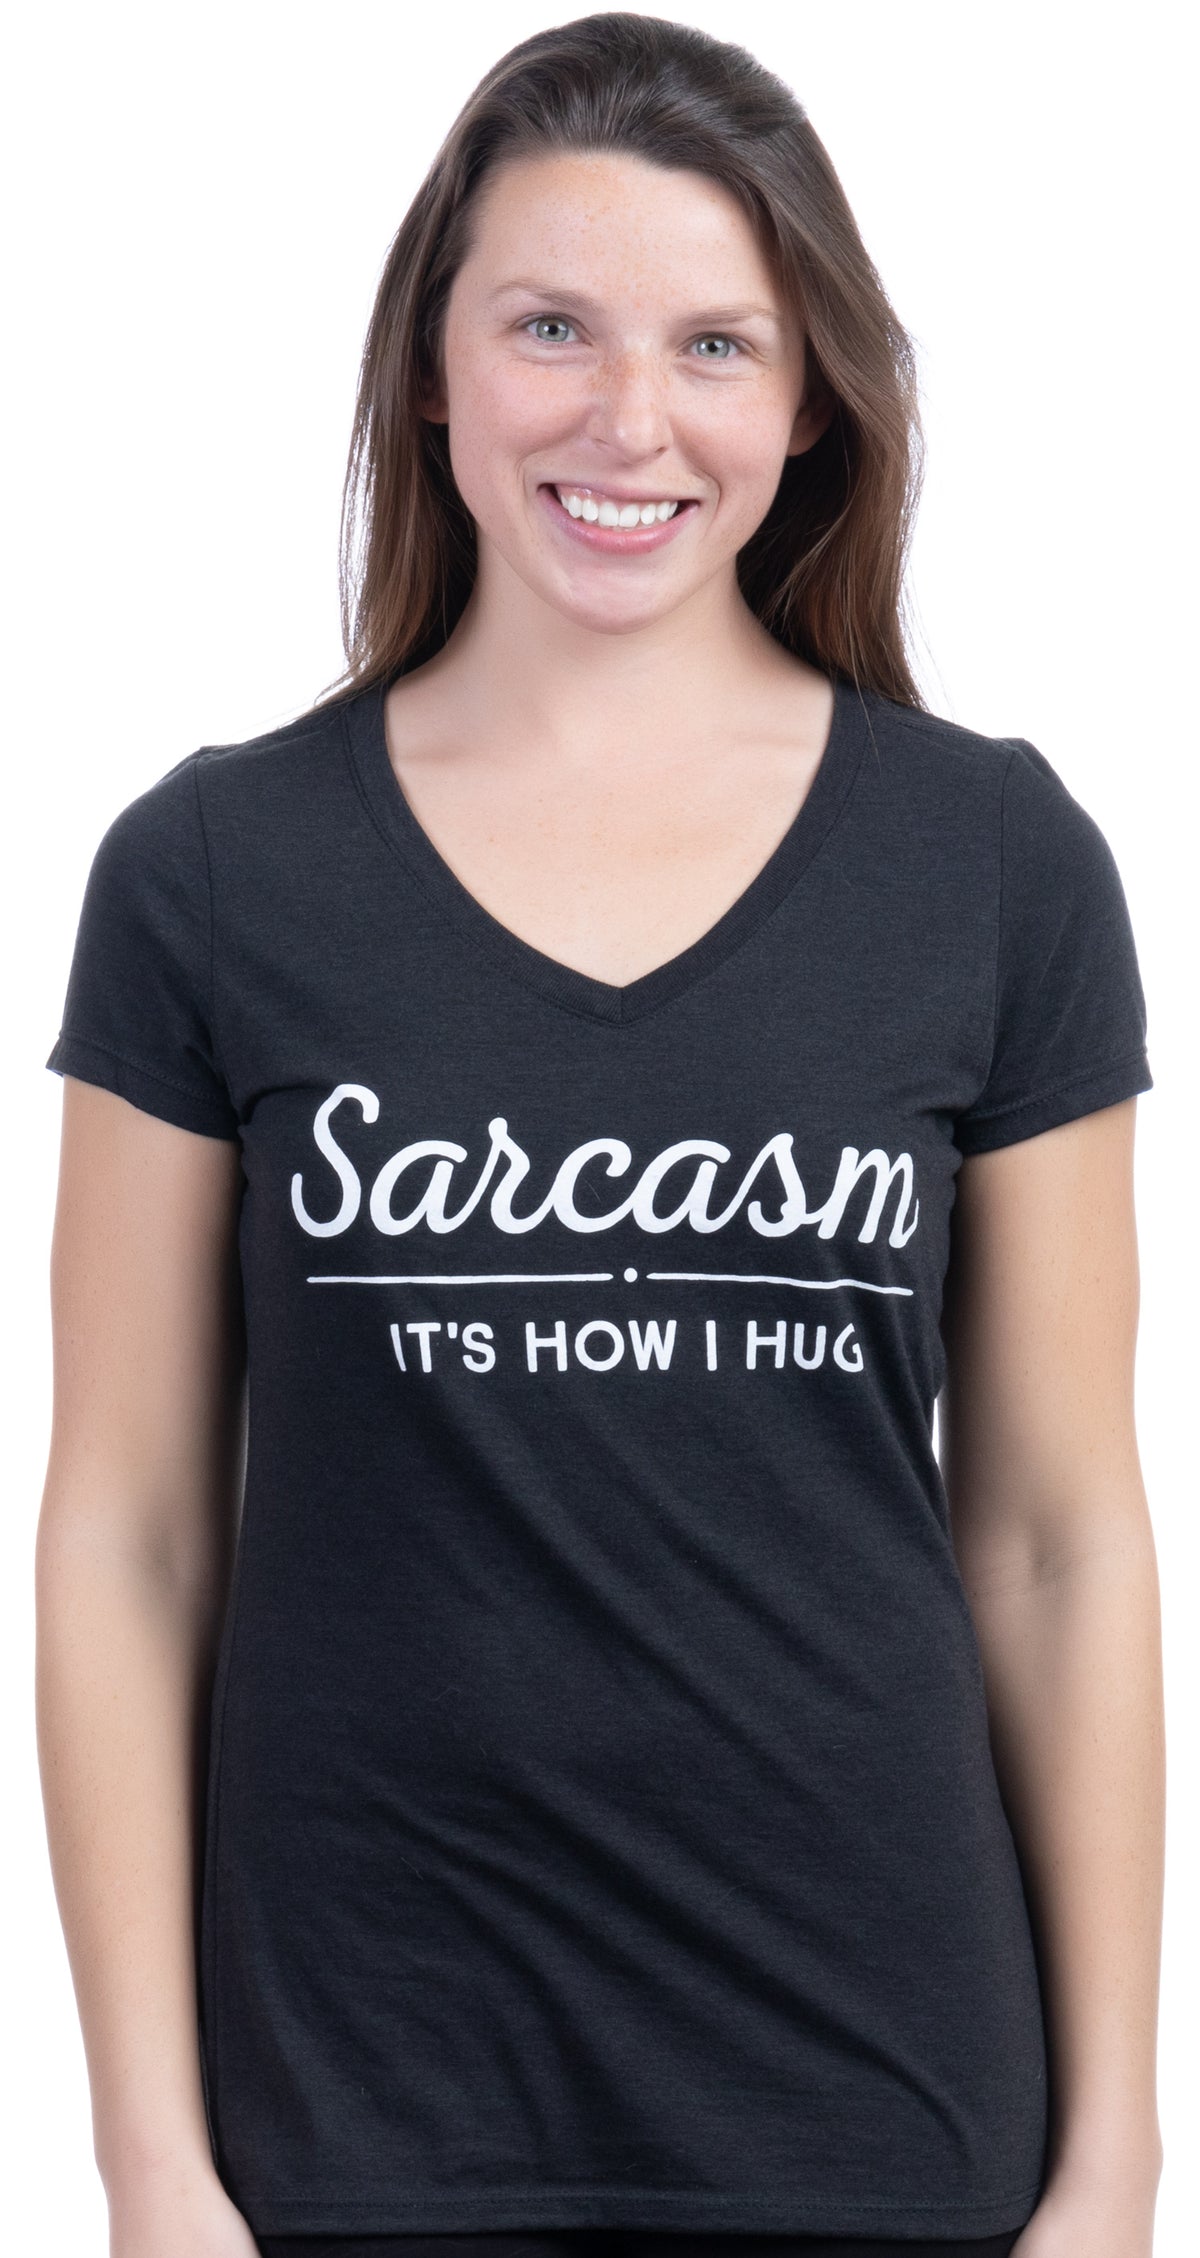 Sarcasm, It's How I Hug | Funny Sarcastic Graphic Tee Shirt Humor Joke Attitude for Women Funny T-Shirt